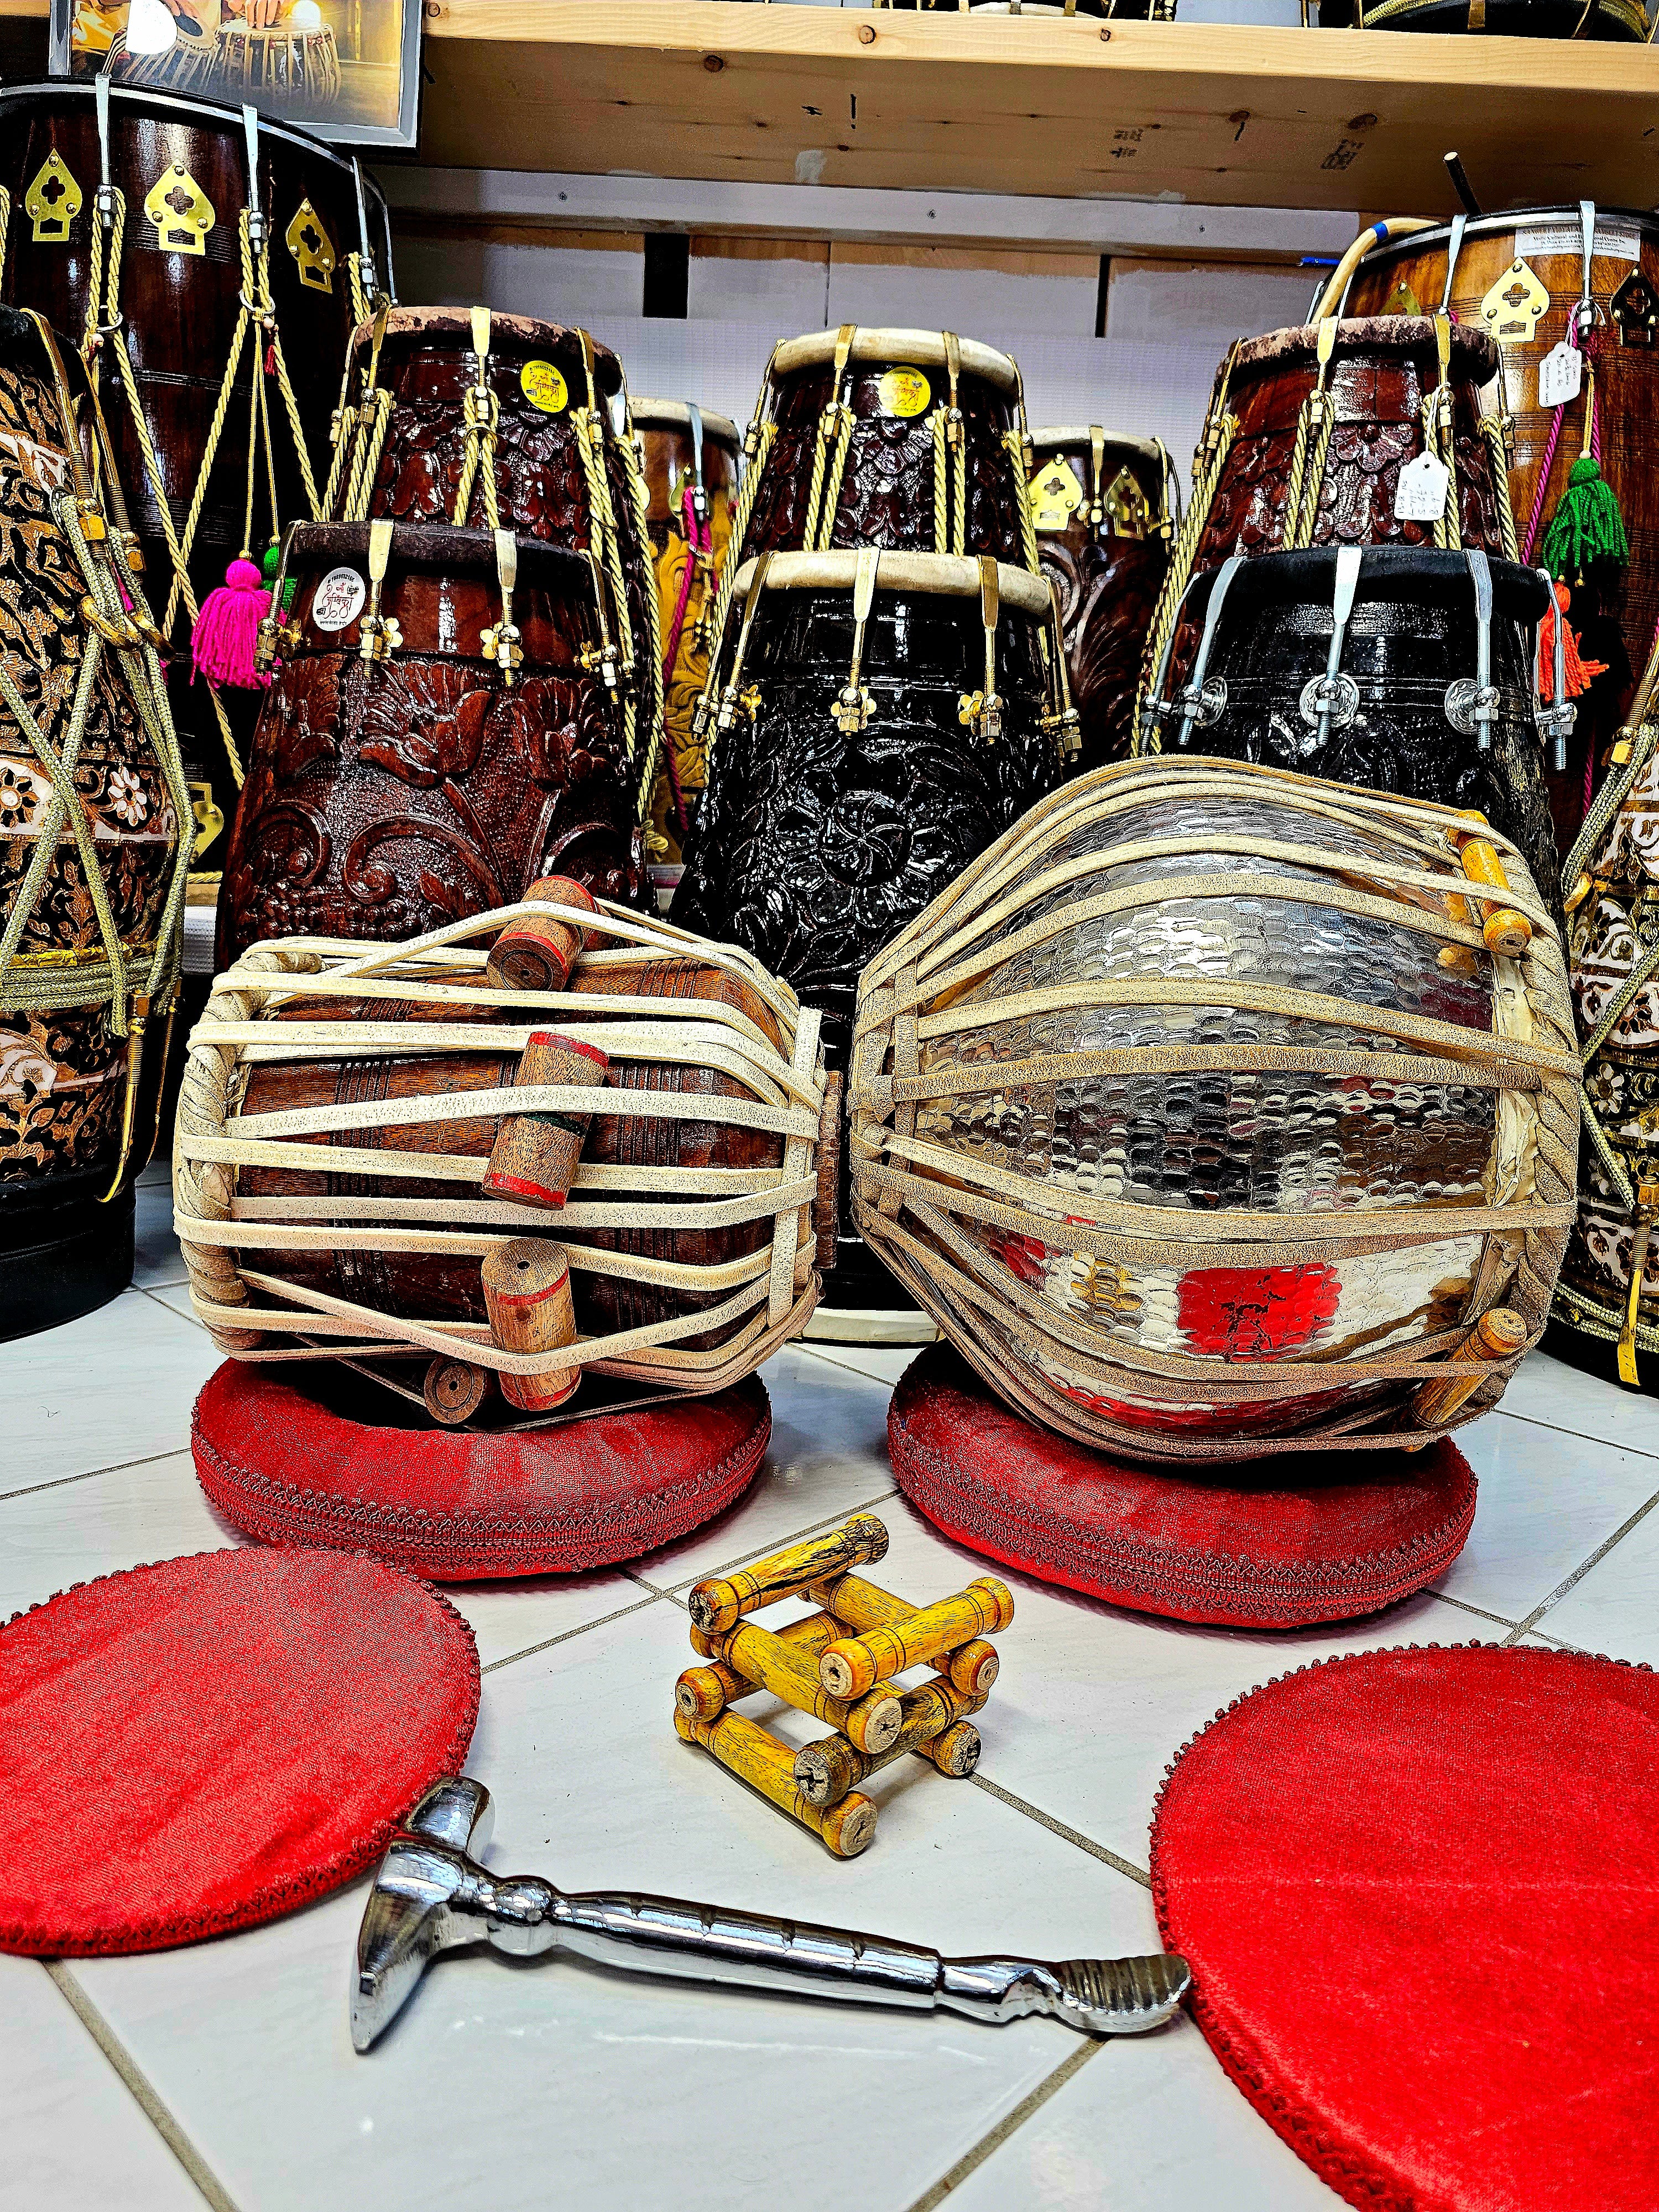 Artisanal Echo Tabla Set - 5.75" D# Red Sheesham Dayan and 9.25" Hammer Dented Design Silver Copper Bharat Kakade Bayan